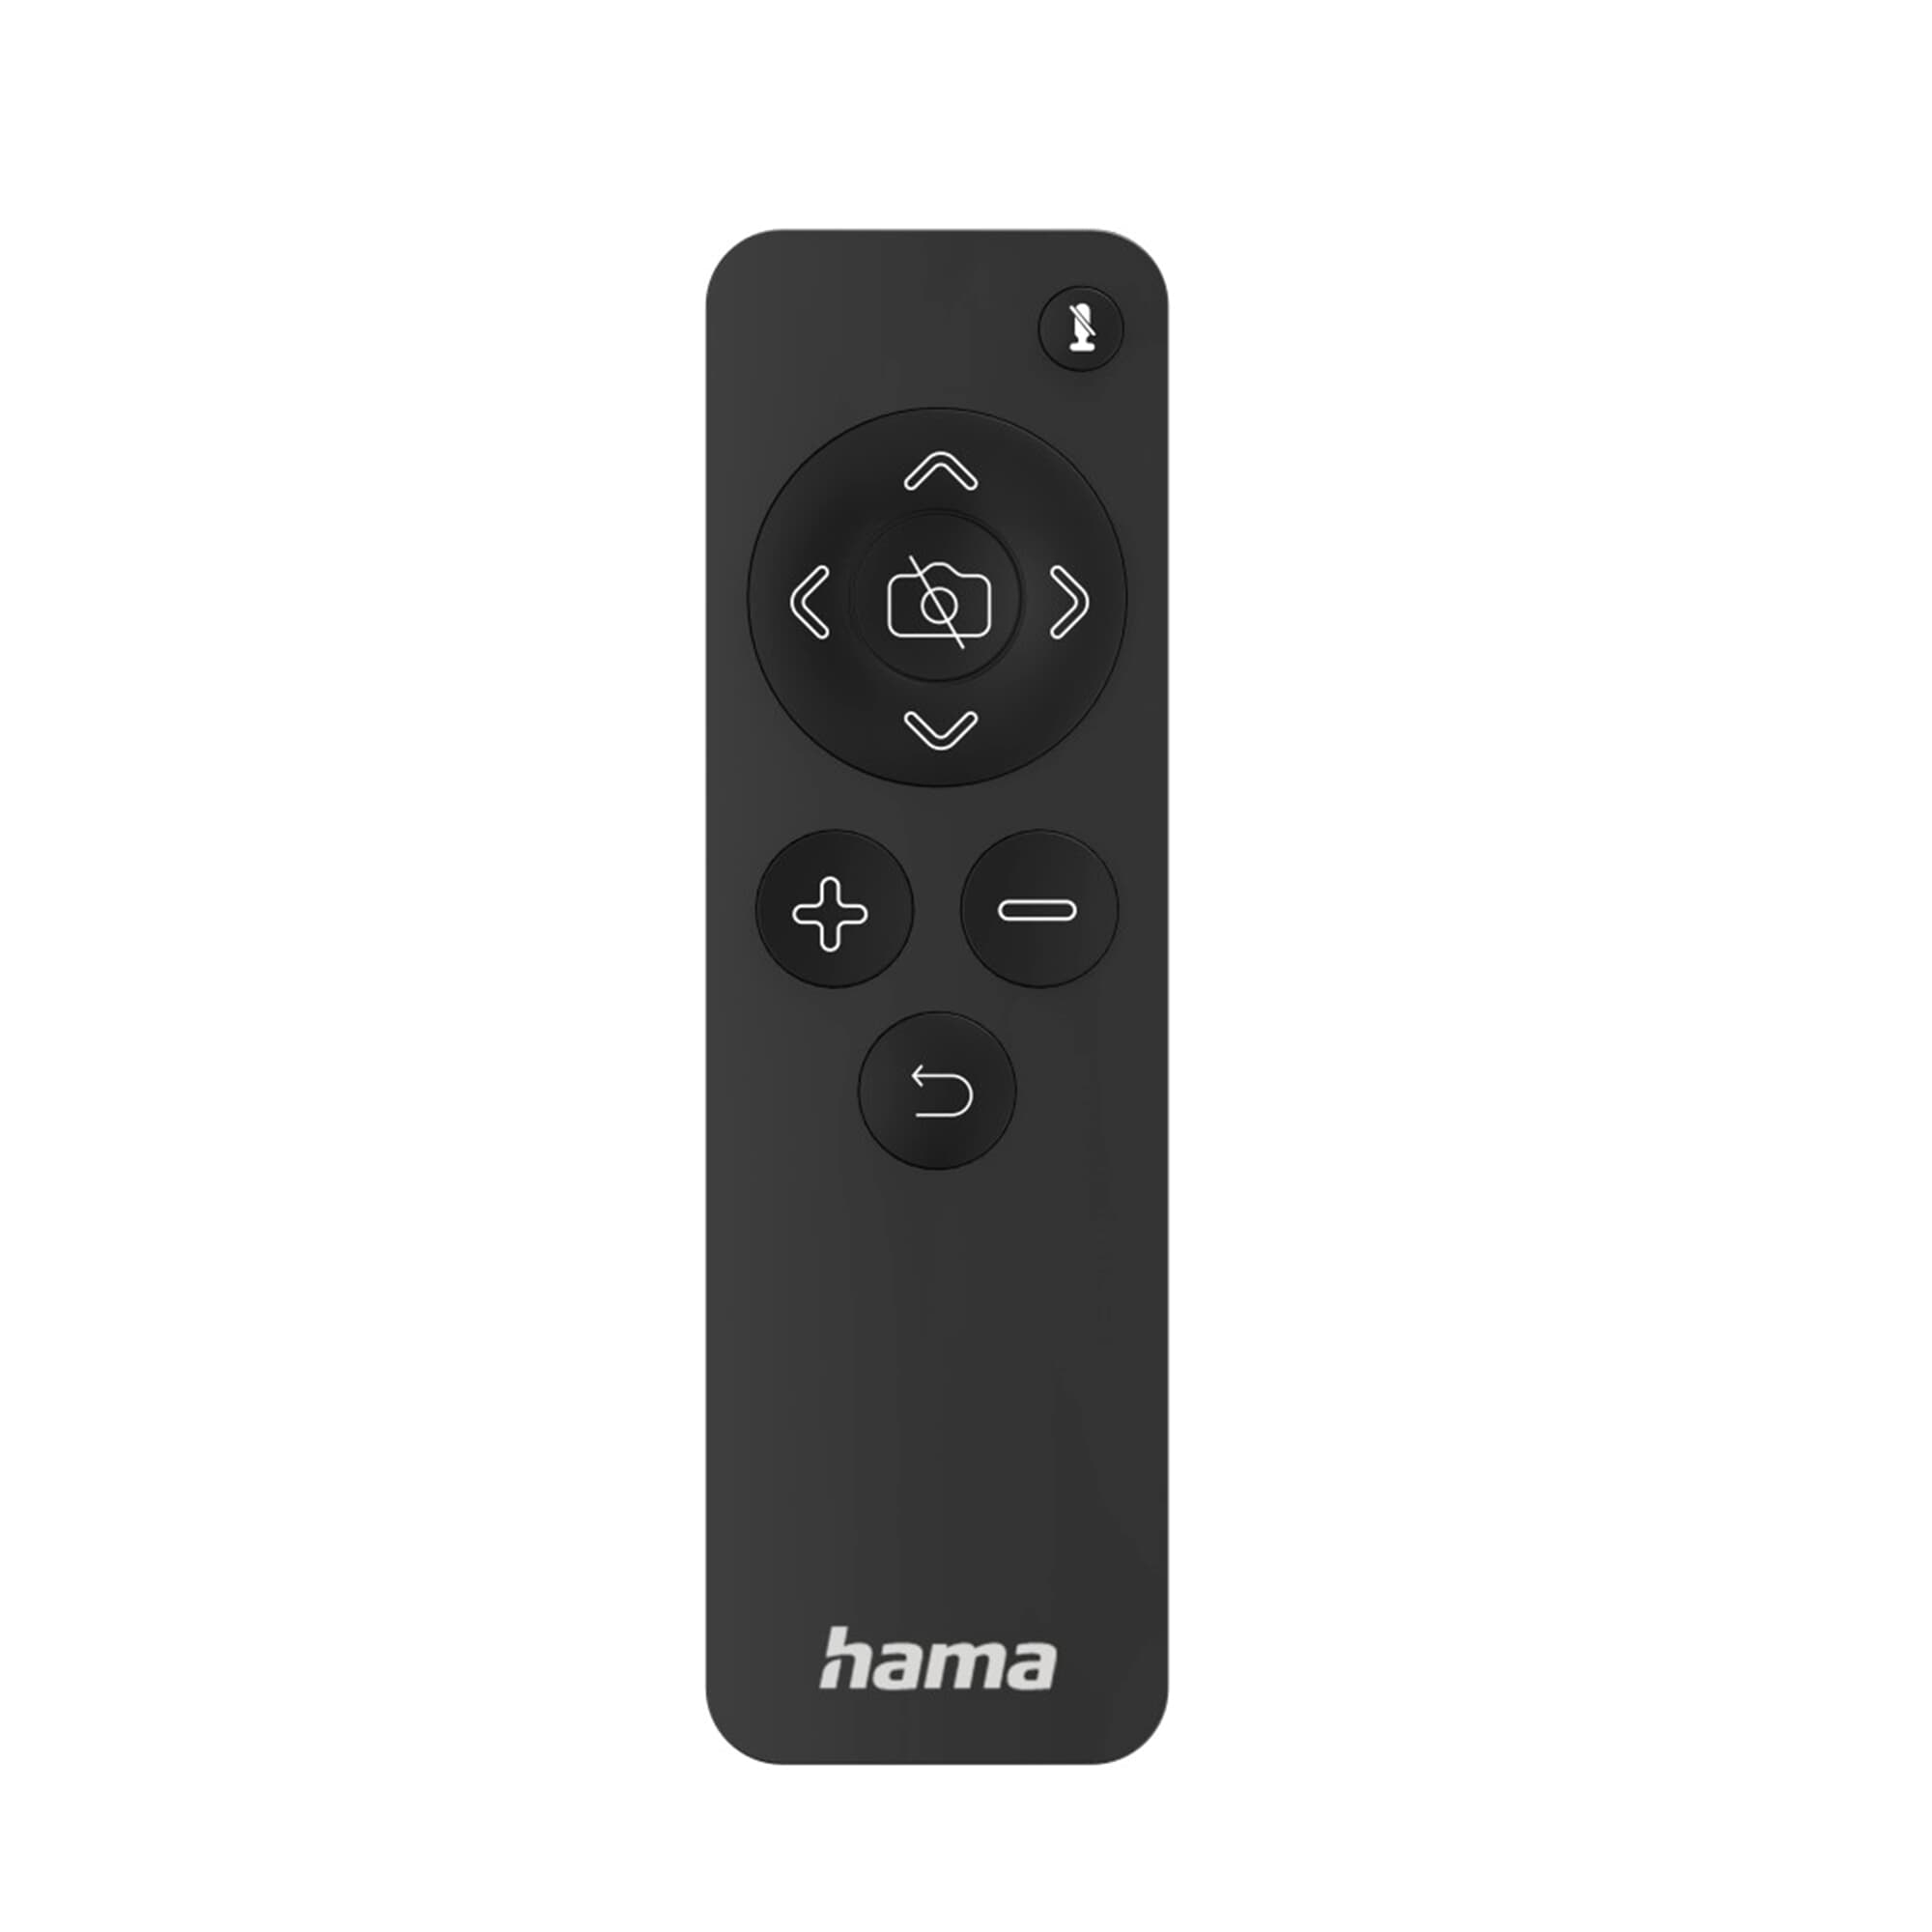 HAMA C-800 Pro Ringlight Webcam